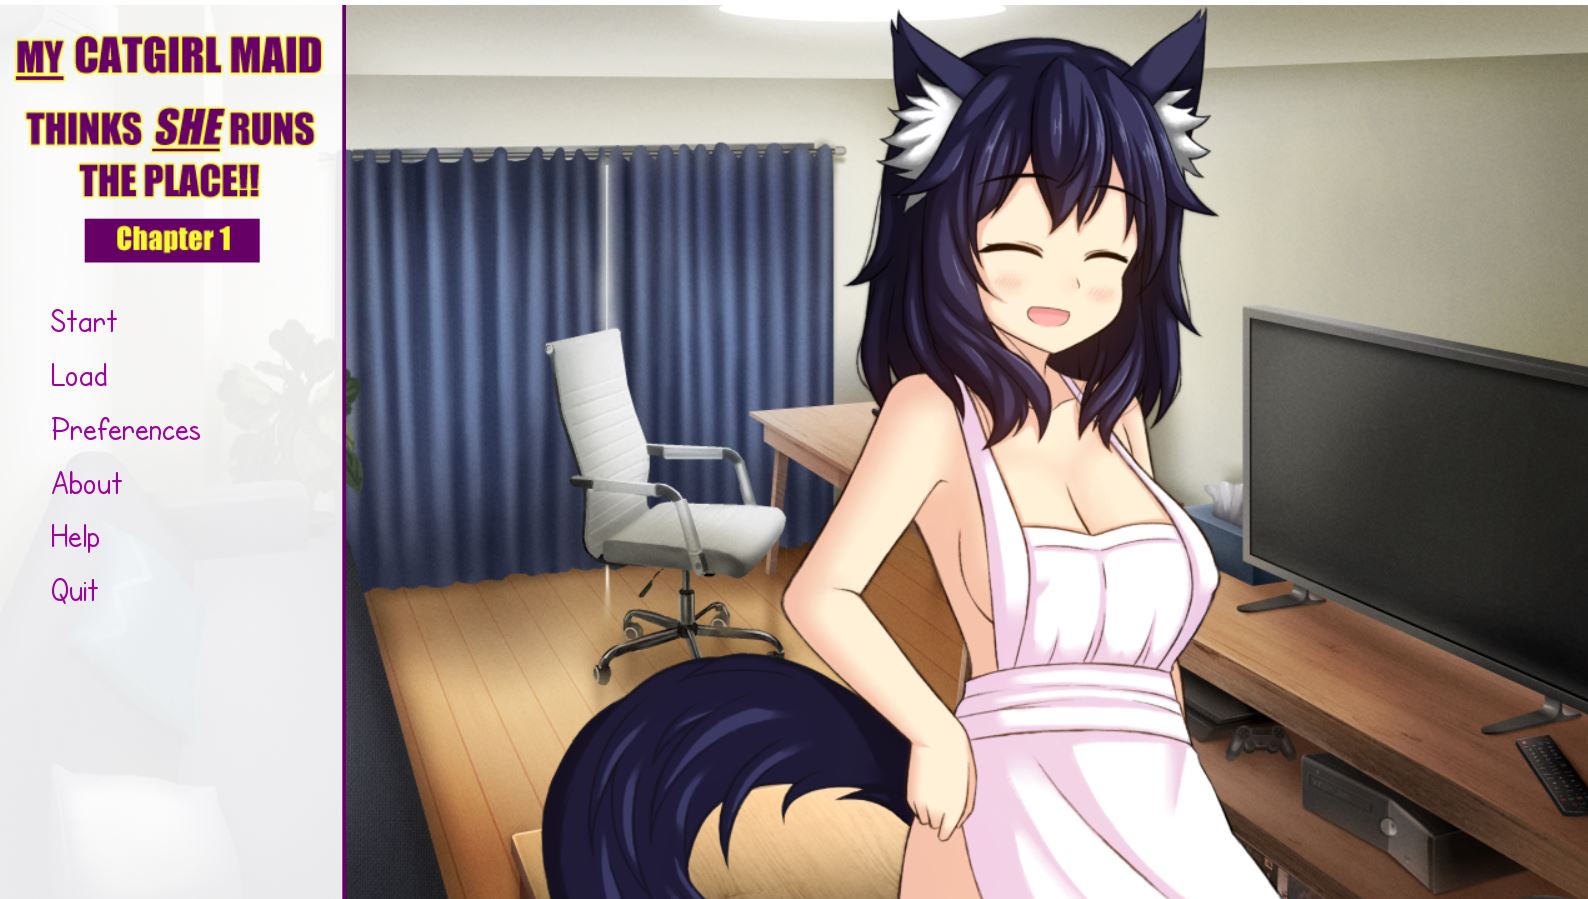 Catgirl porn game download